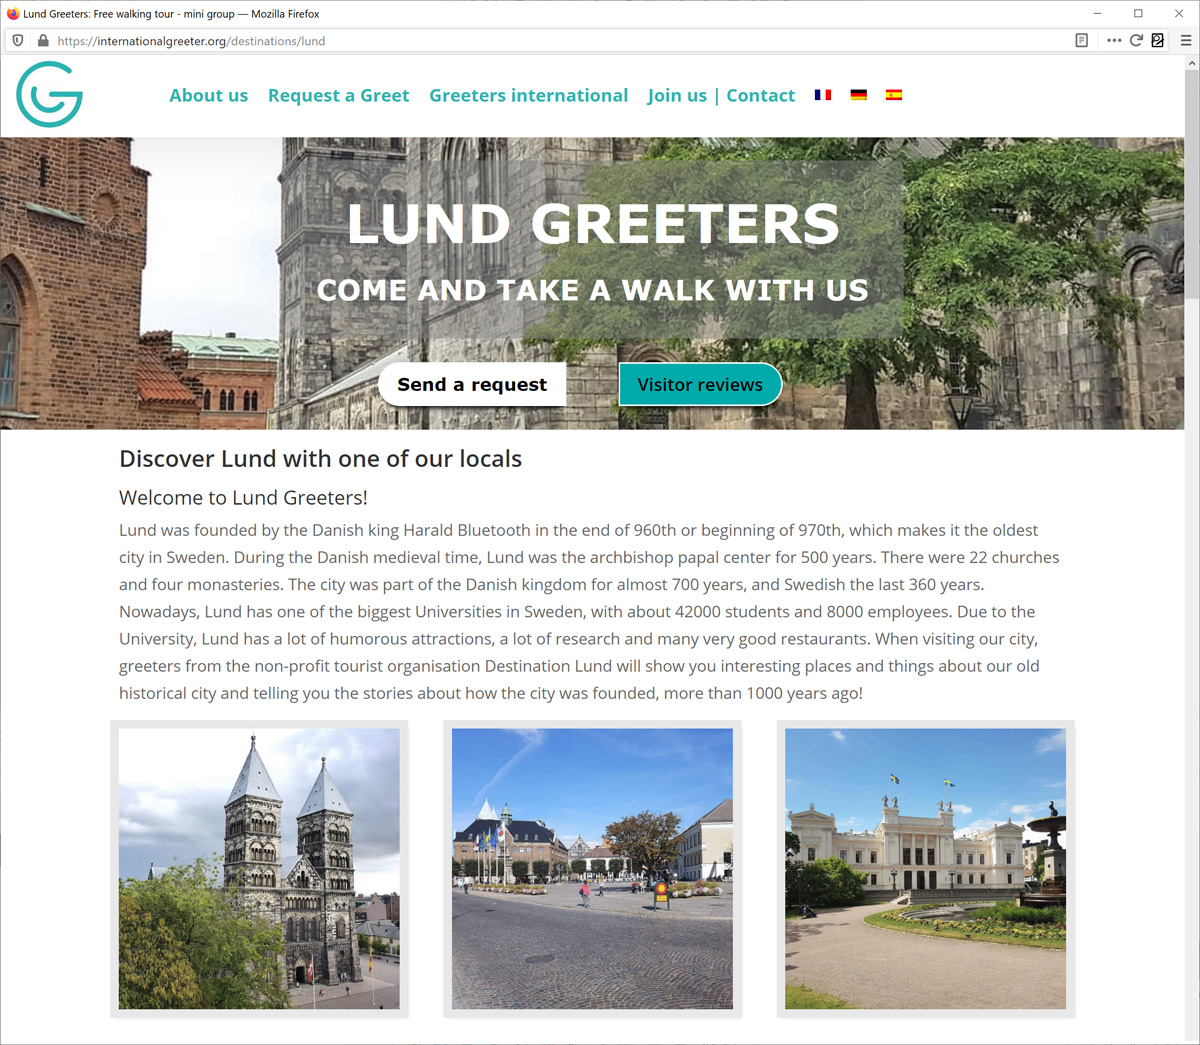 Lunds ideella turistinformation Destination Lunds greeter-sida